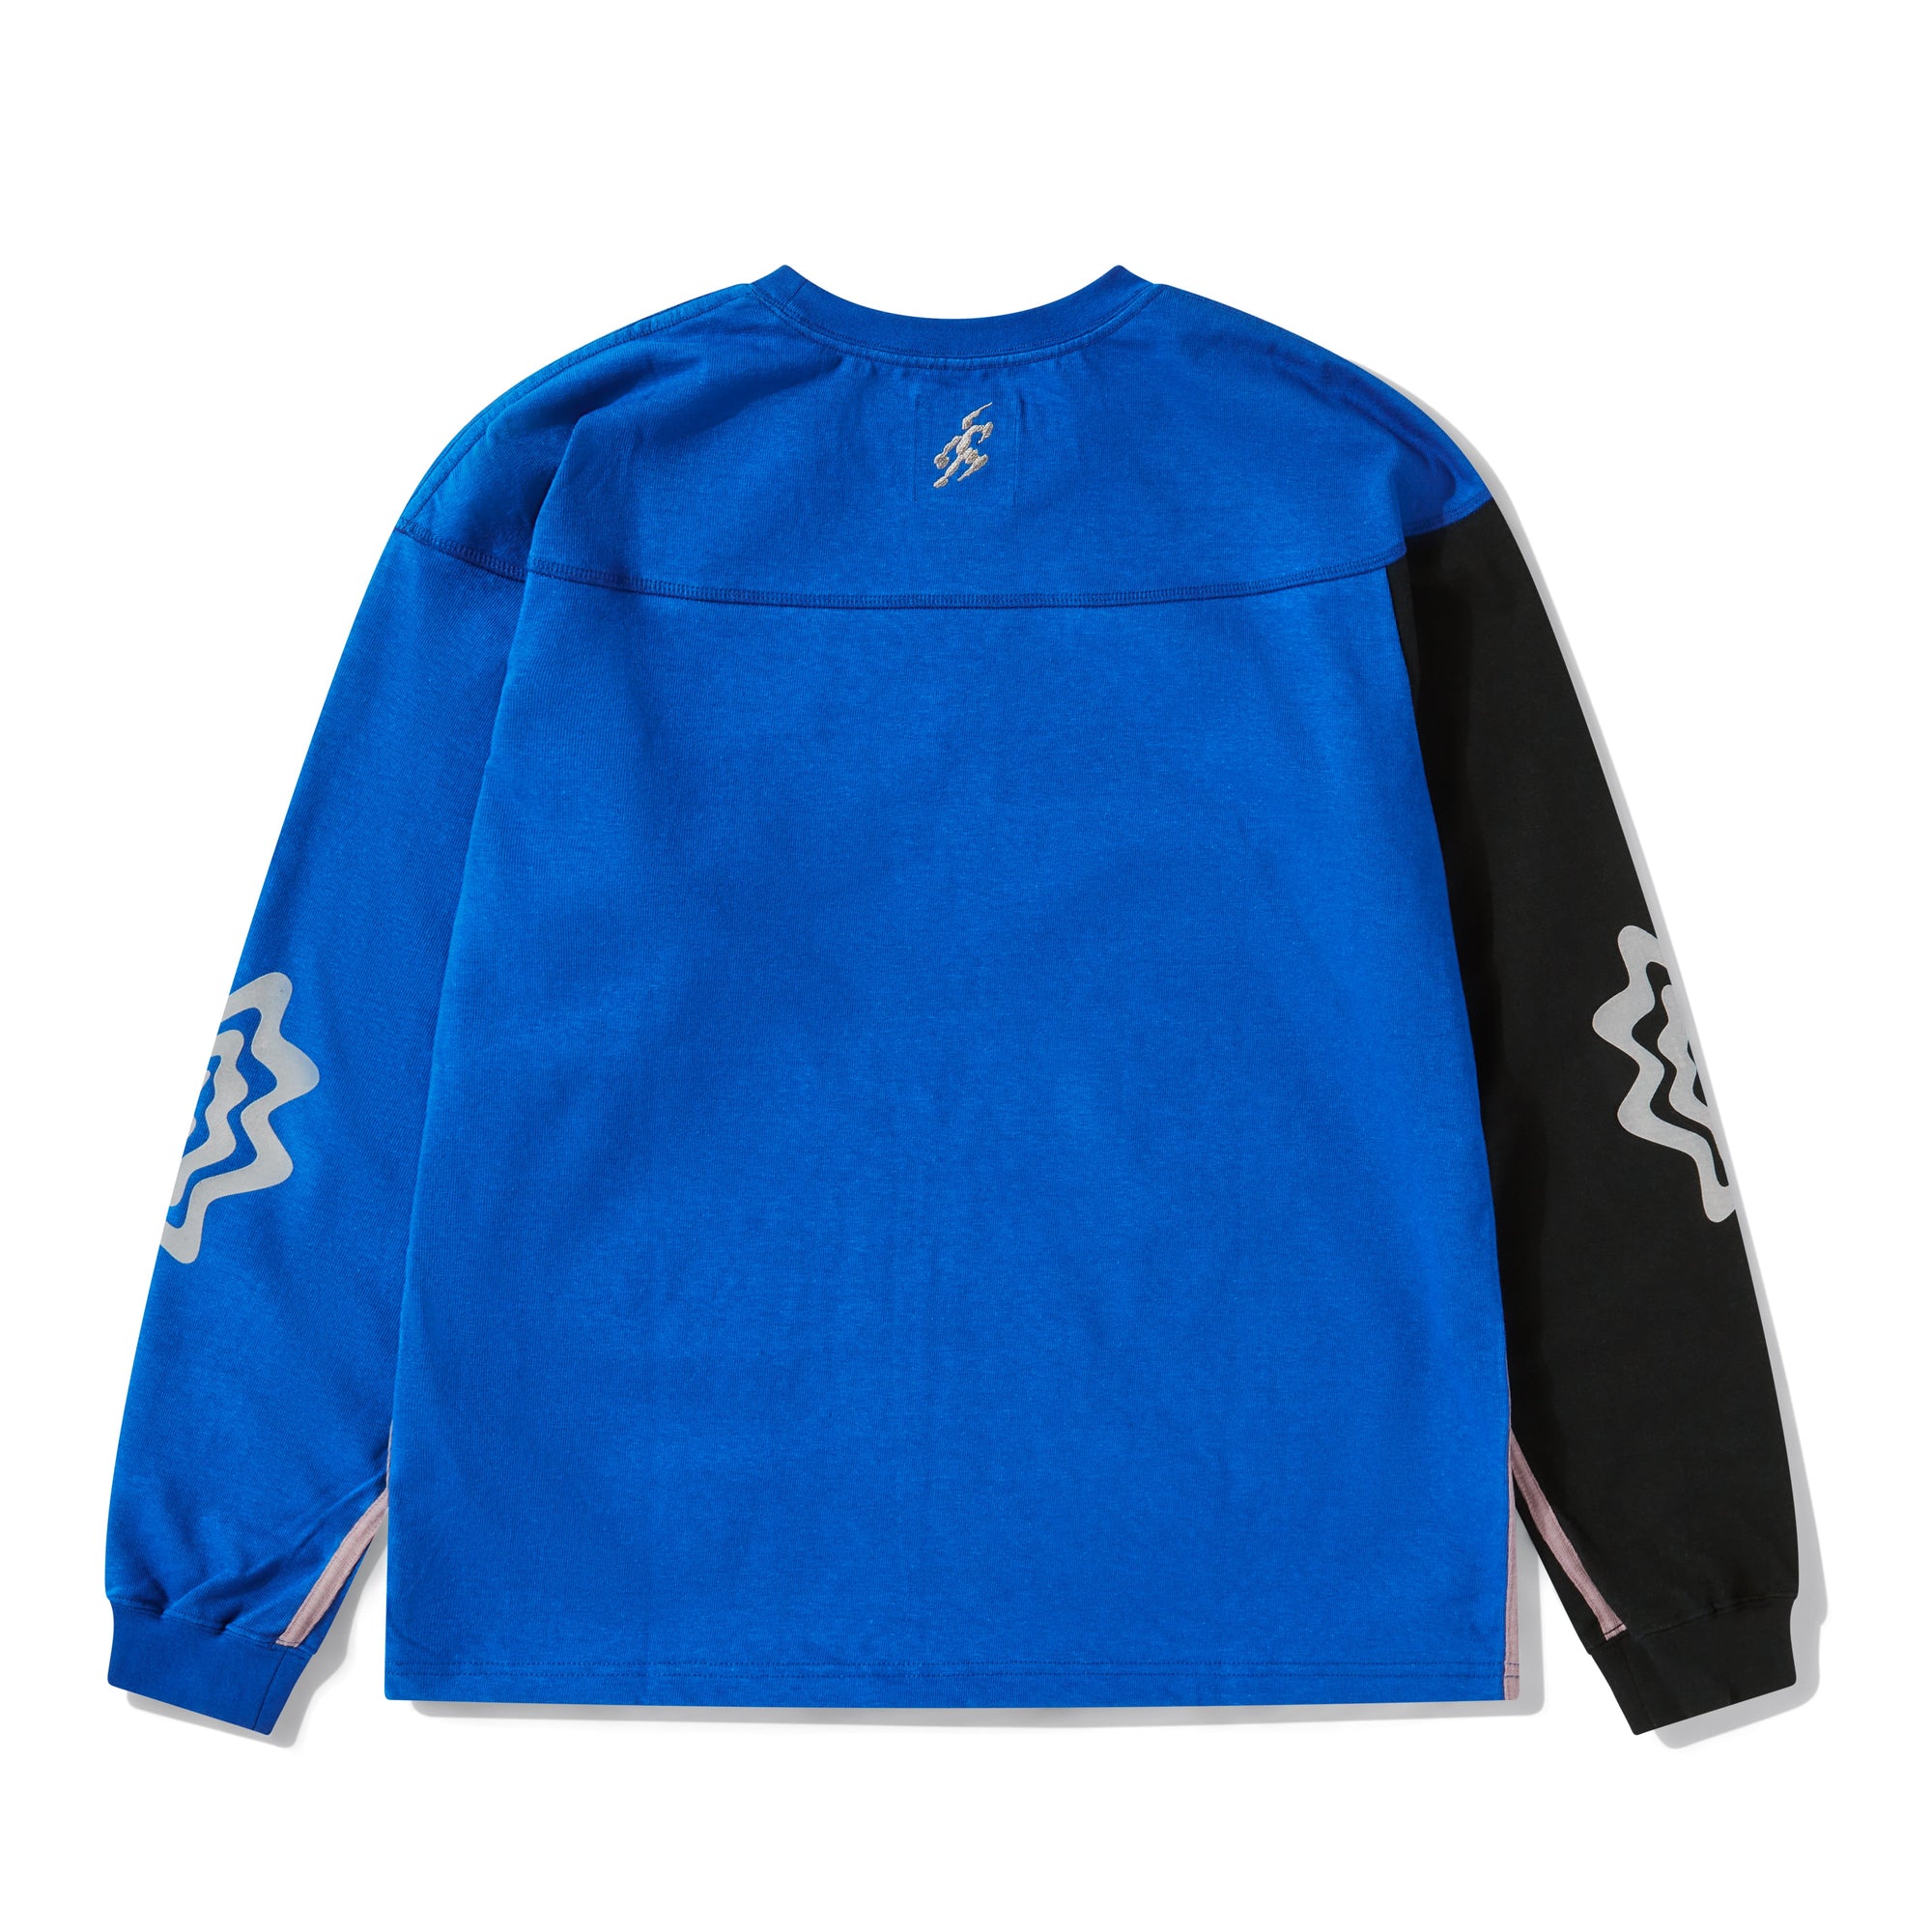 Asics Novalis - Bixance Long Sleeve T-Shirt - (Asics Blue / Obsidian Black) view 2